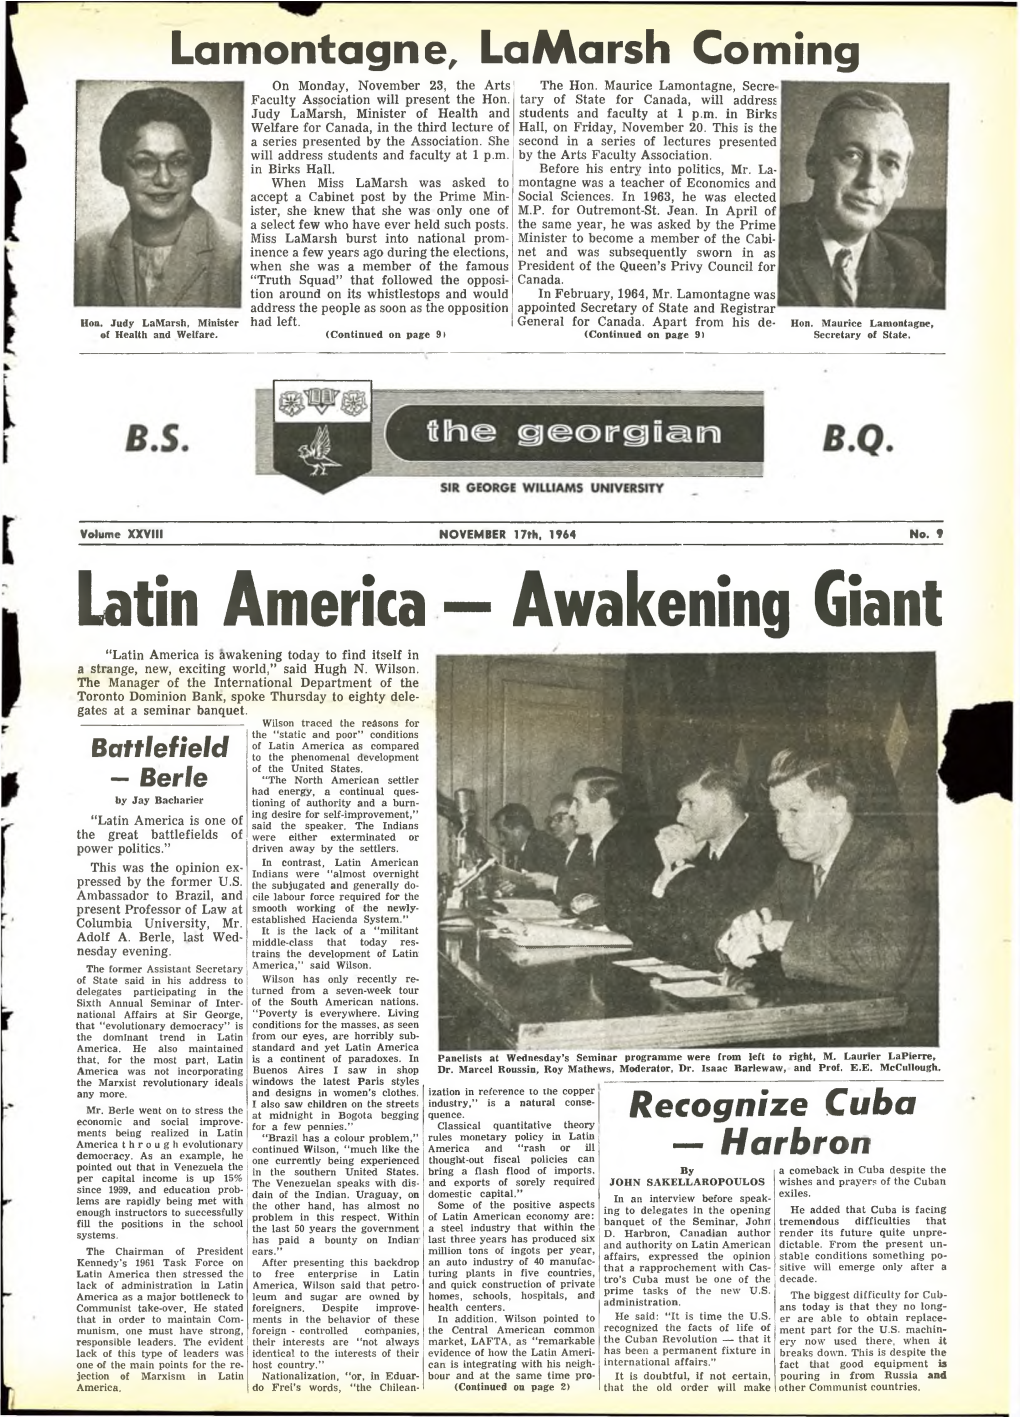 Awakening Giant “Latin America Is Awakening Today to Find Itself in a Strange, New, Exciting World,” Said Hugh N